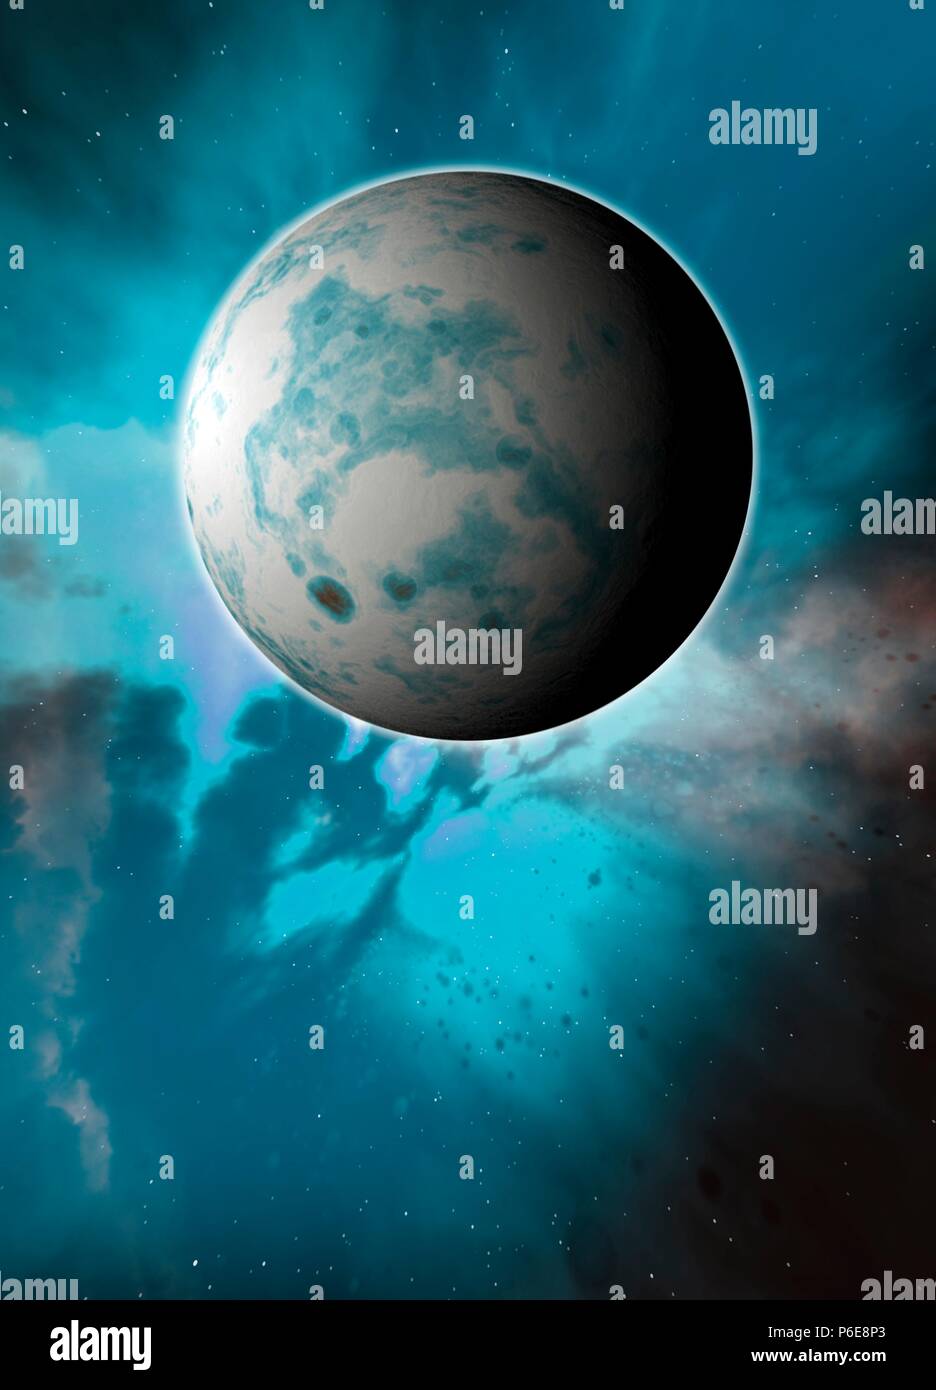 Planets against blue background, illustration. Stock Photo